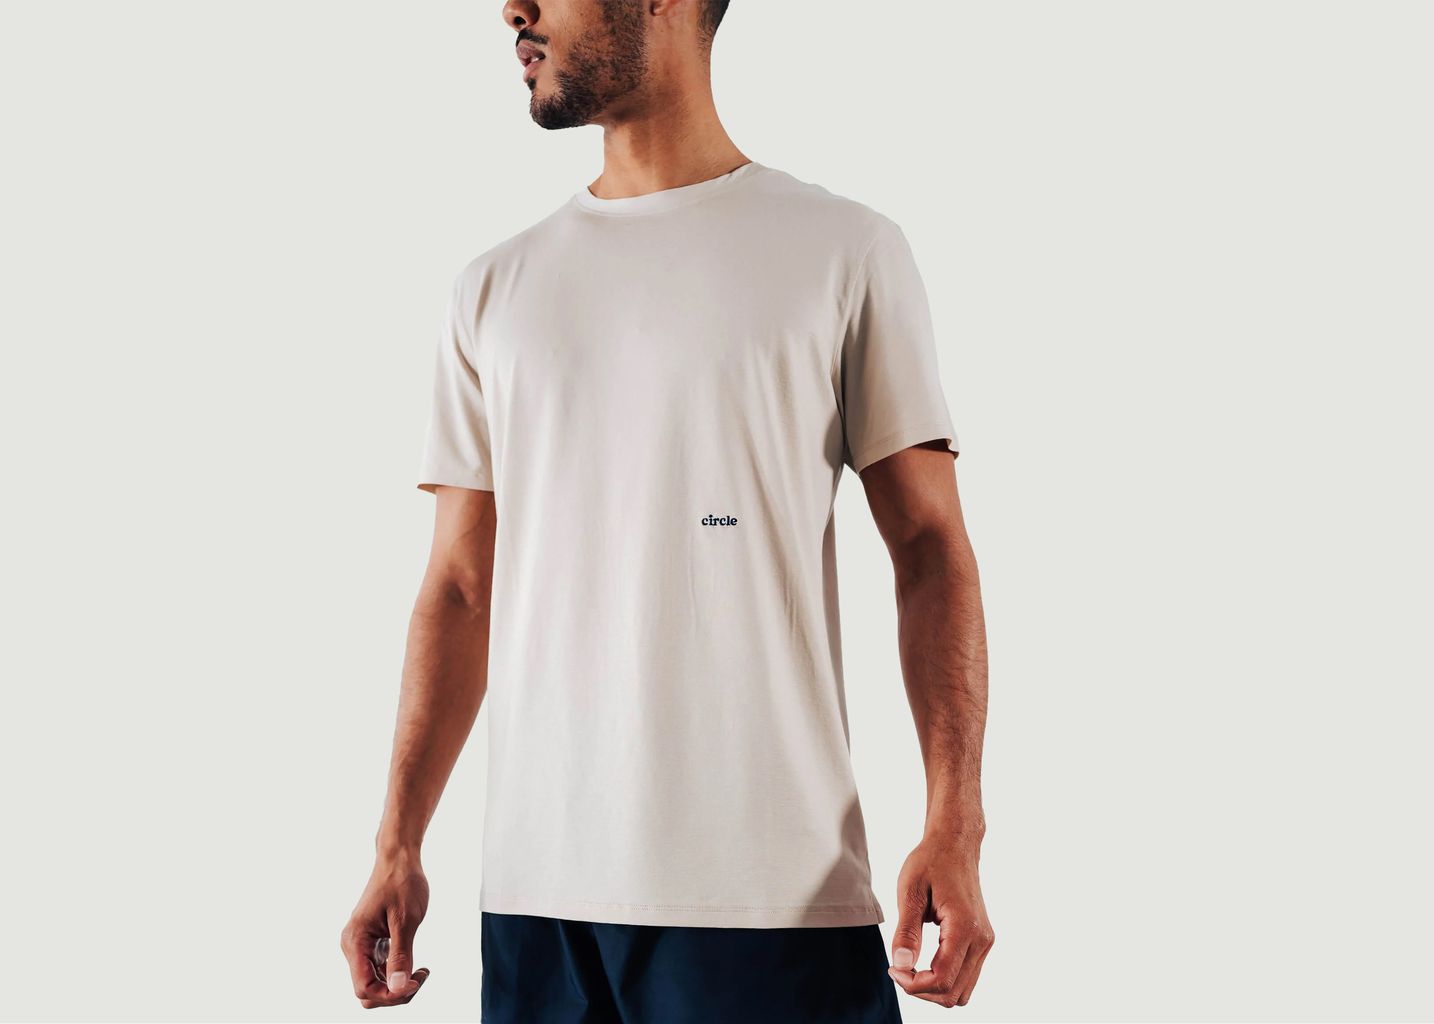 Iconic sport tee shirt - Circle Sportswear